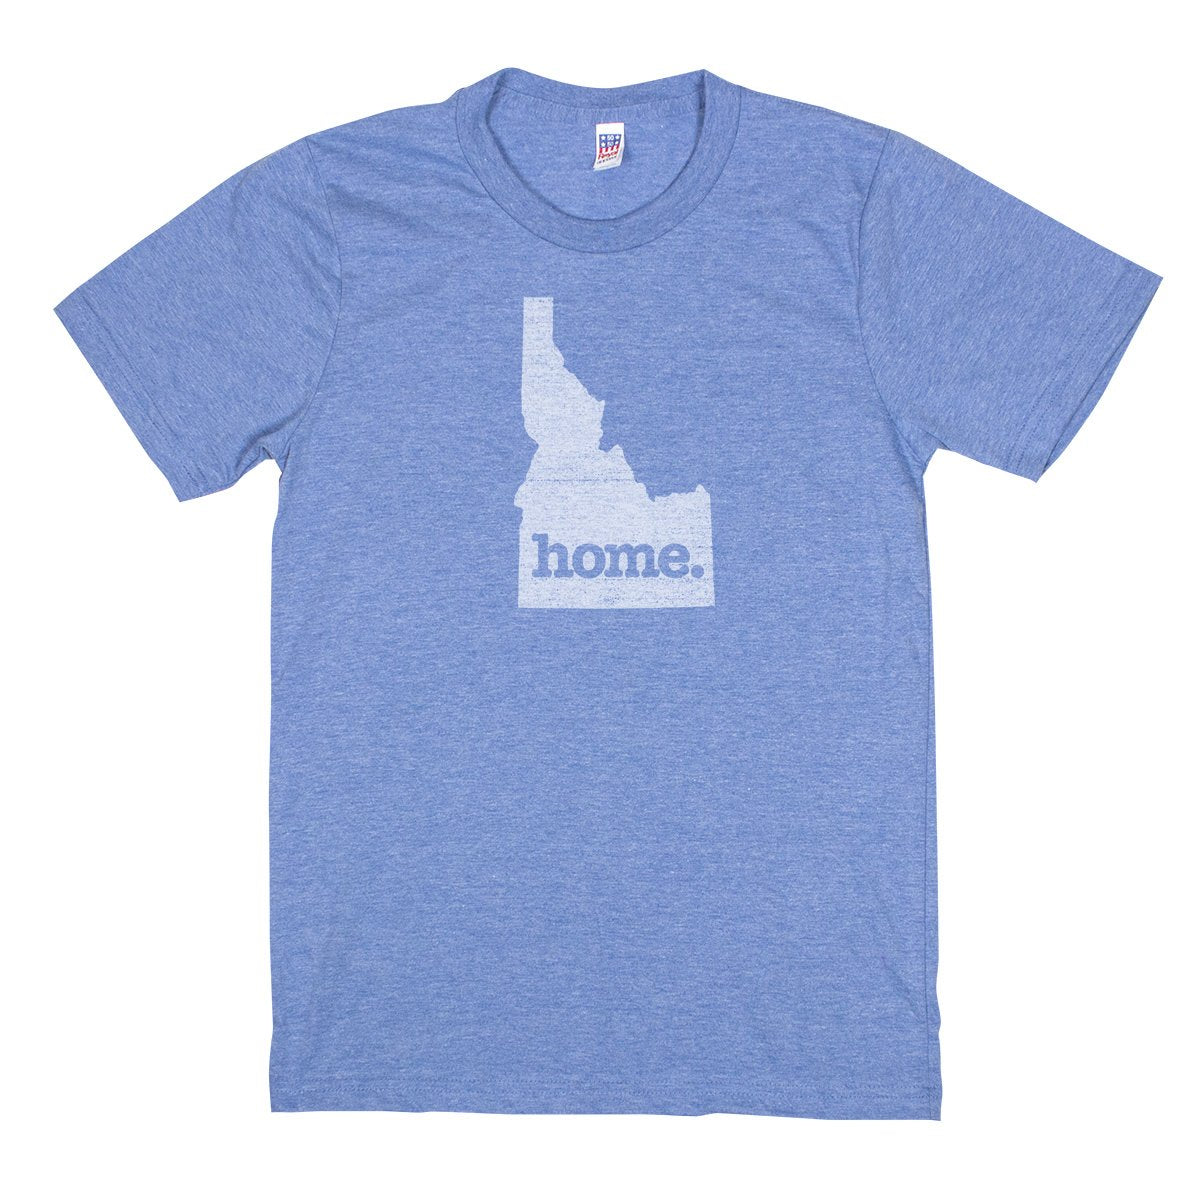 home. Men’s Unisex T-Shirt - Virginia